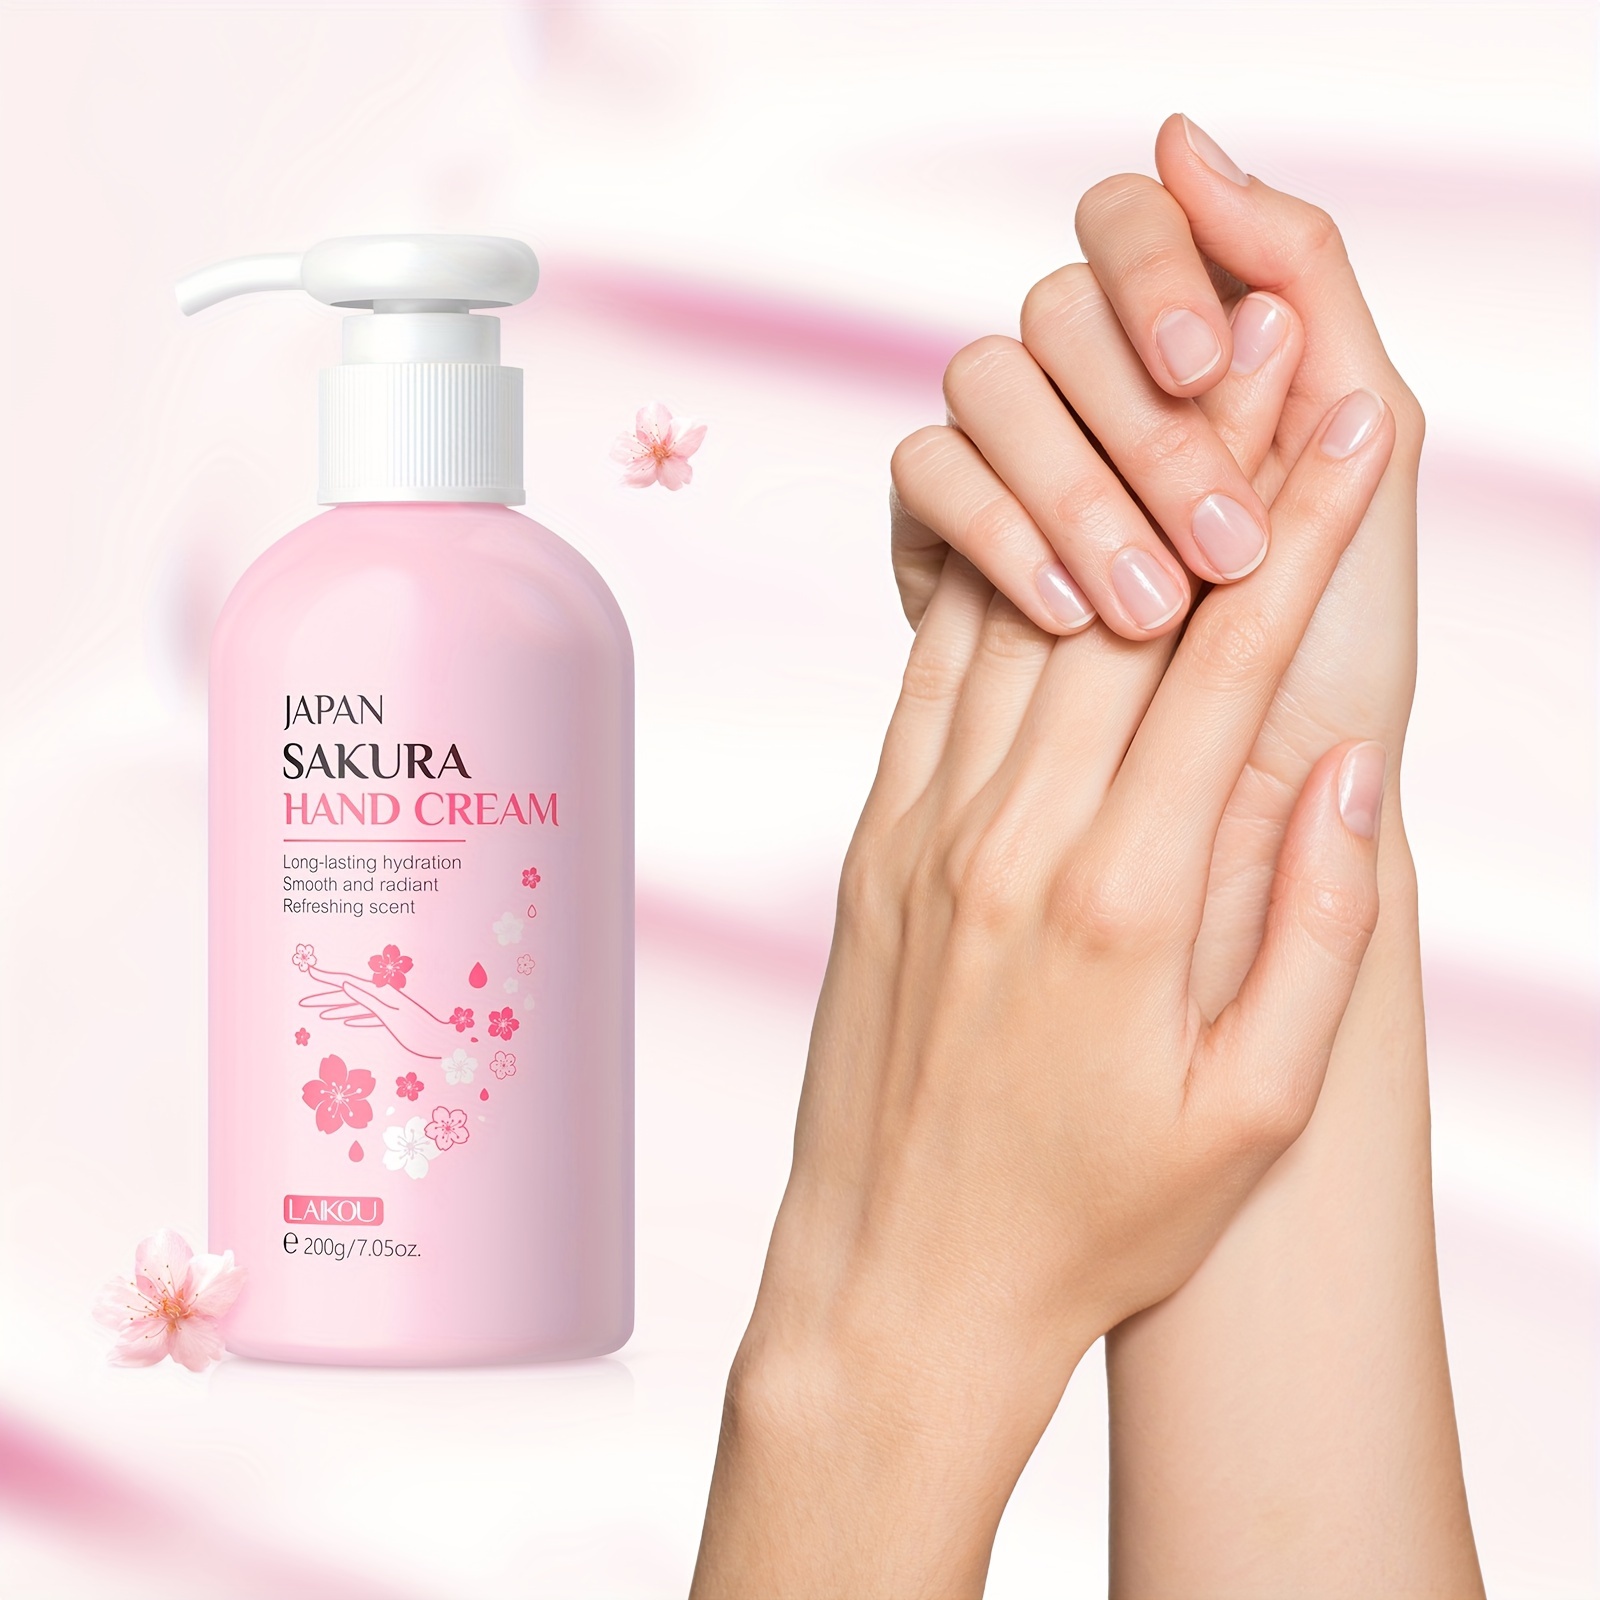 

200g Sakura Hand Cream, Long Lasting Hydration, Soften Rough Skin Deeply Moisturizing Hand Lotion For Dry Cracked Hands